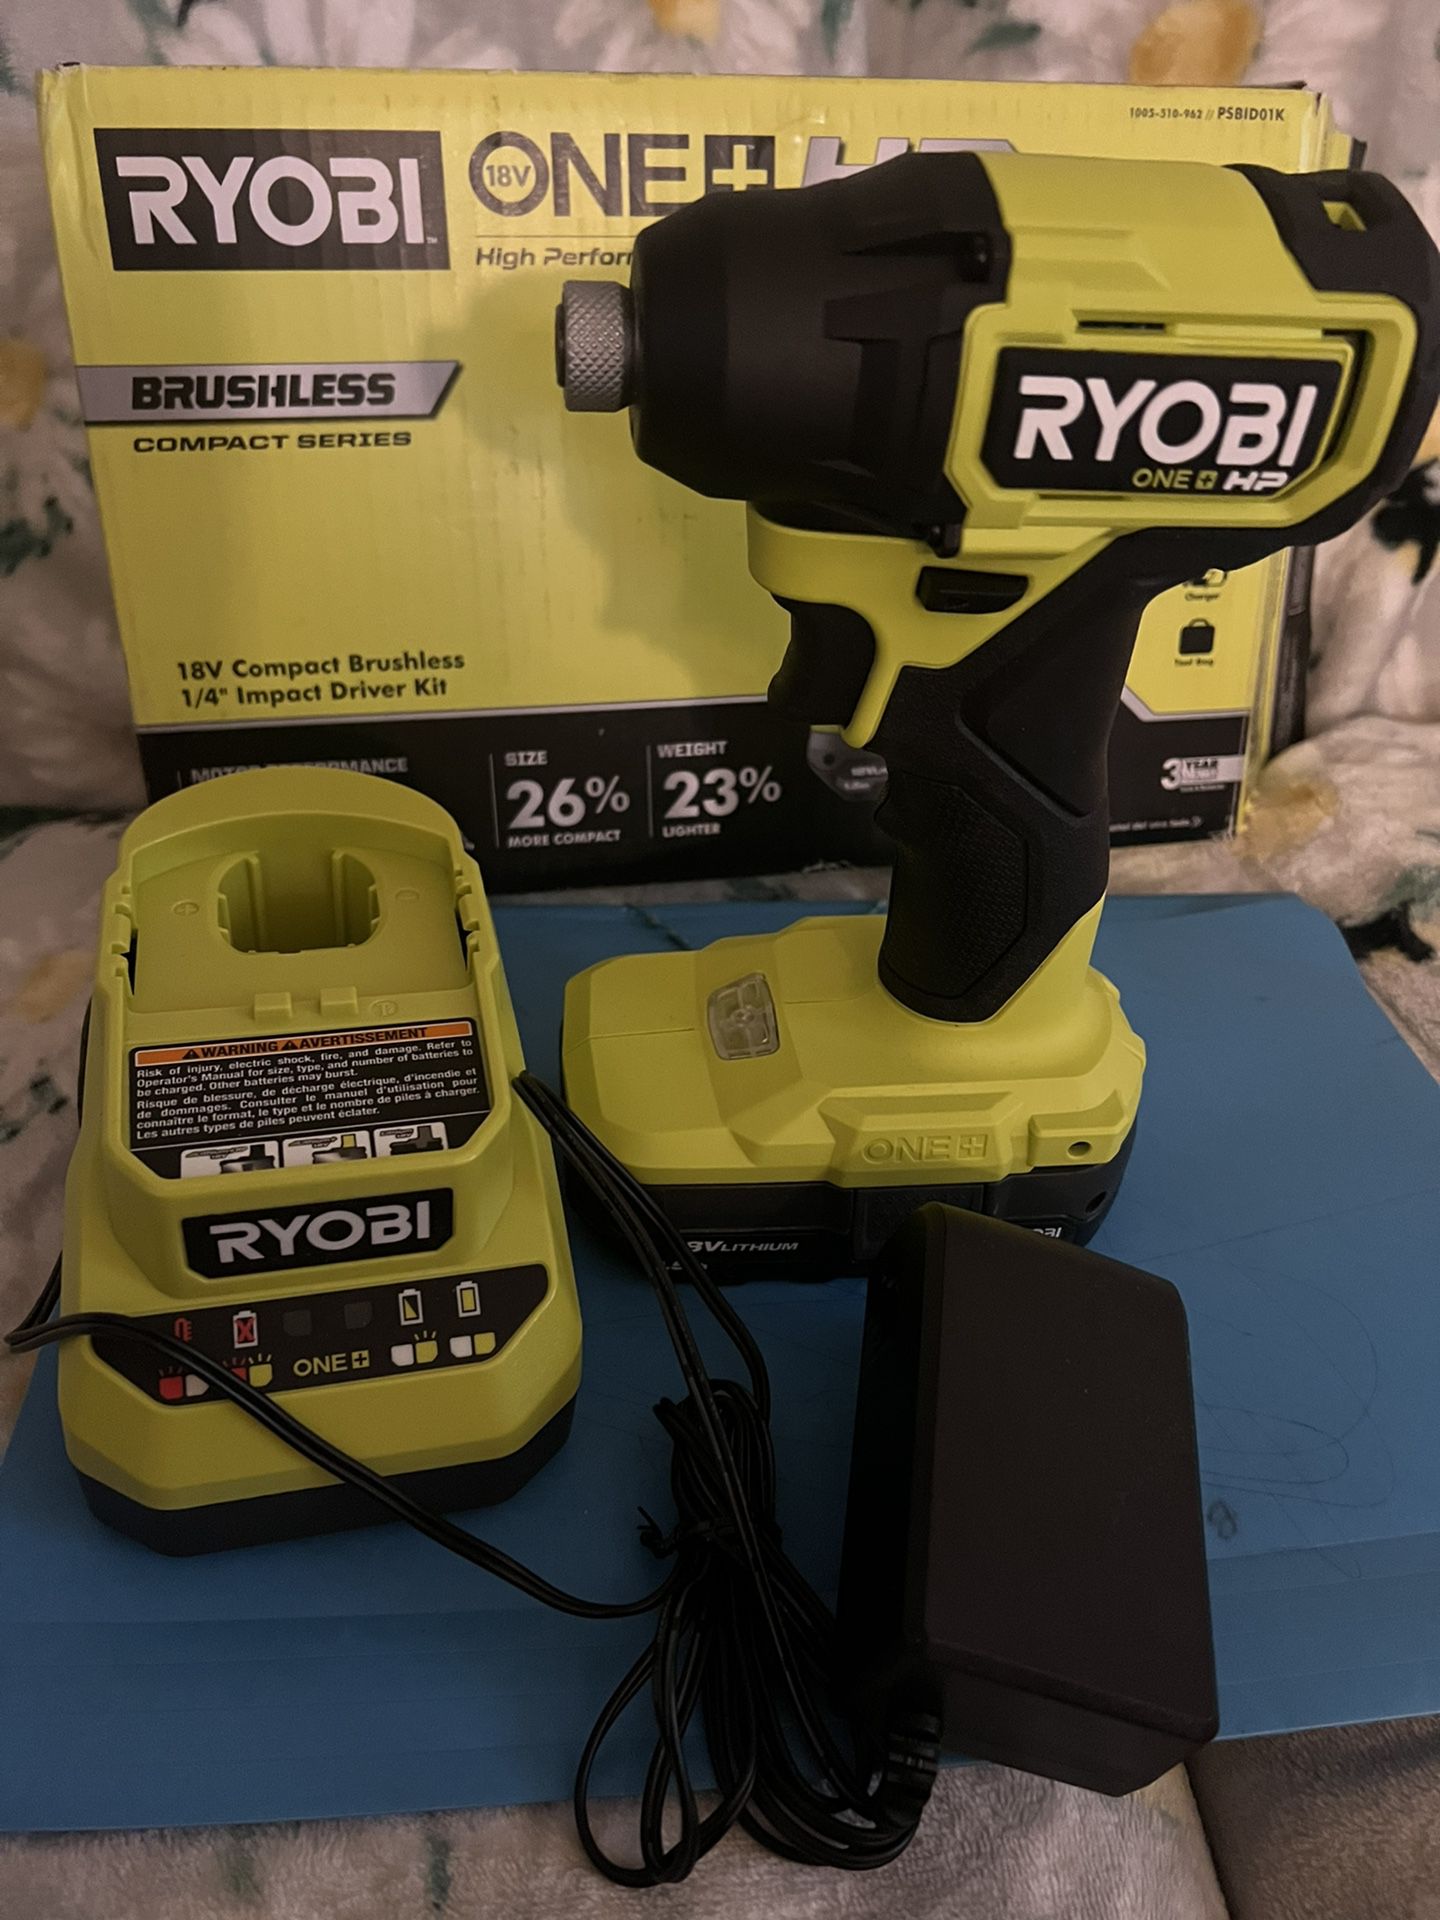 Ryobi One+ Hp Brushless High Performance Compact Series Drill